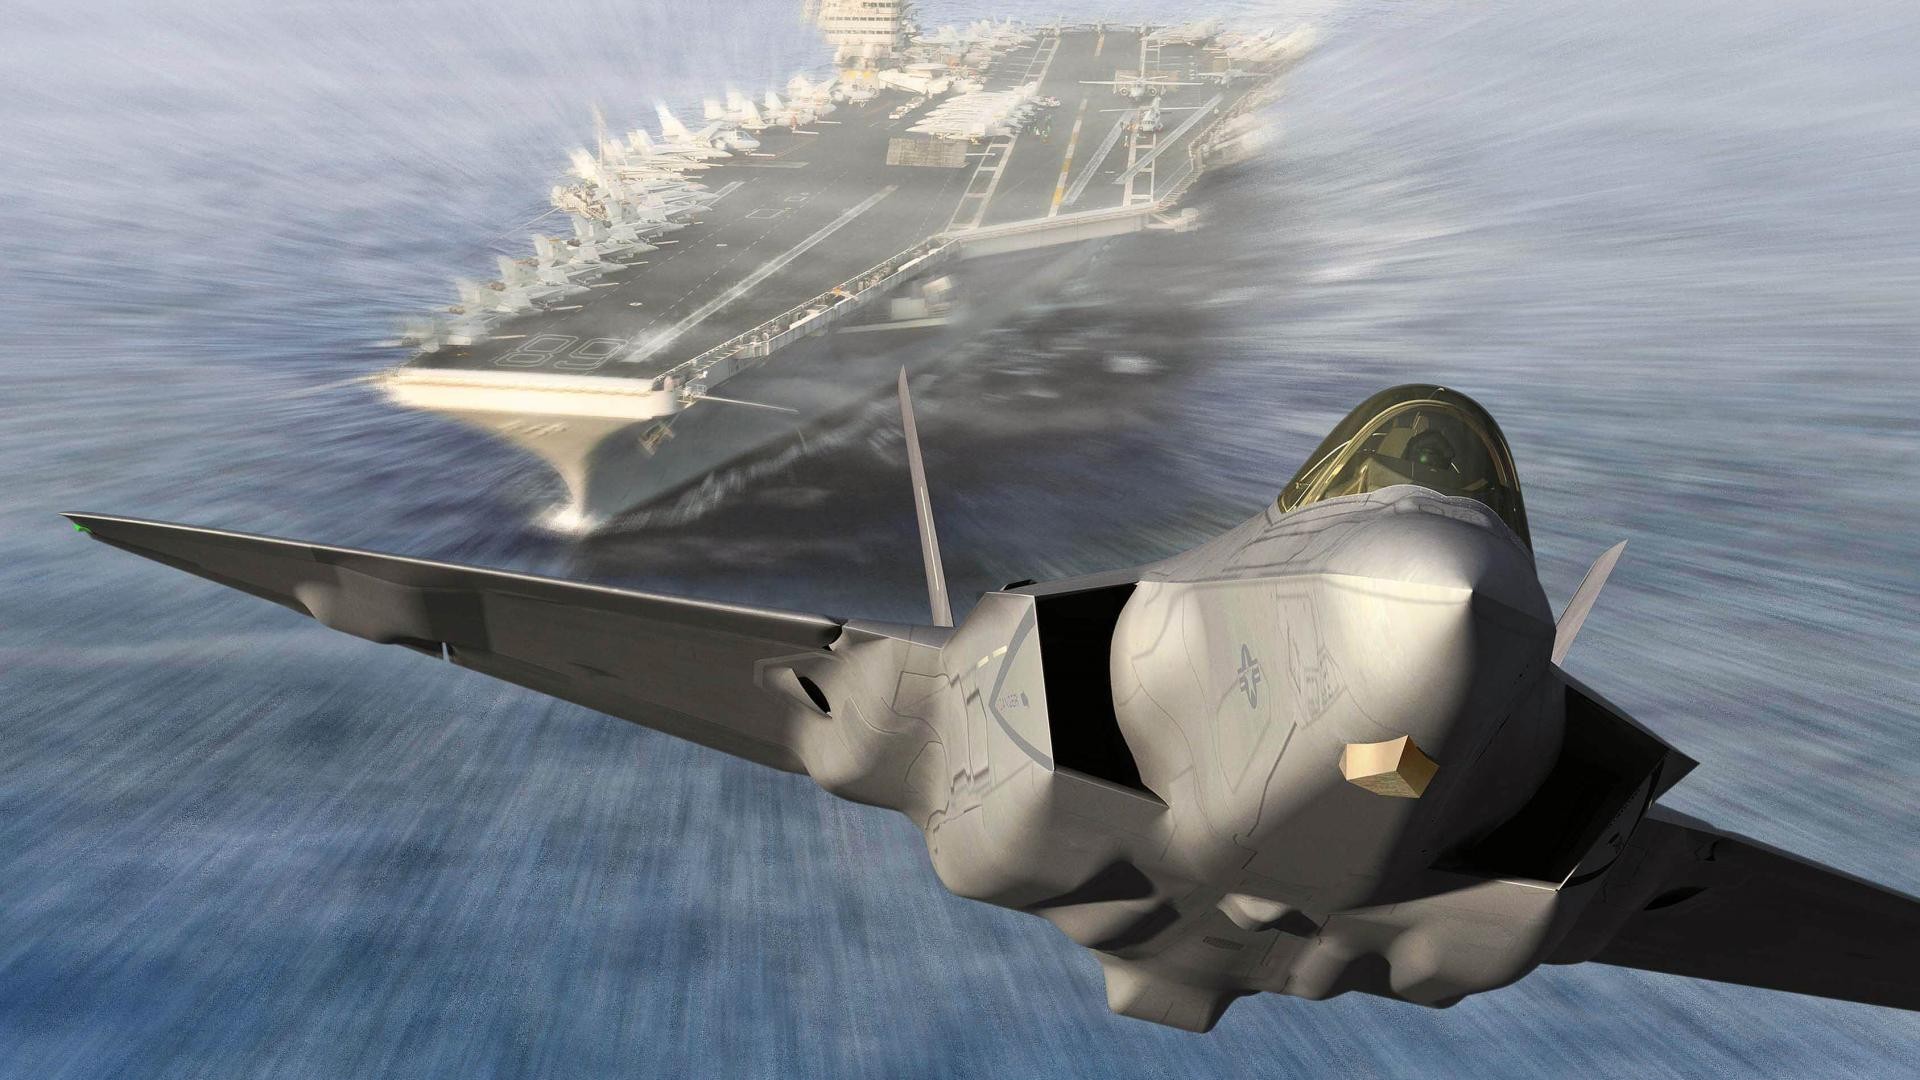 General 1920x1080 aircraft carrier Ace Combat 5: The Unsung War jet fighter video game art video games military aircraft aircraft military warship ship